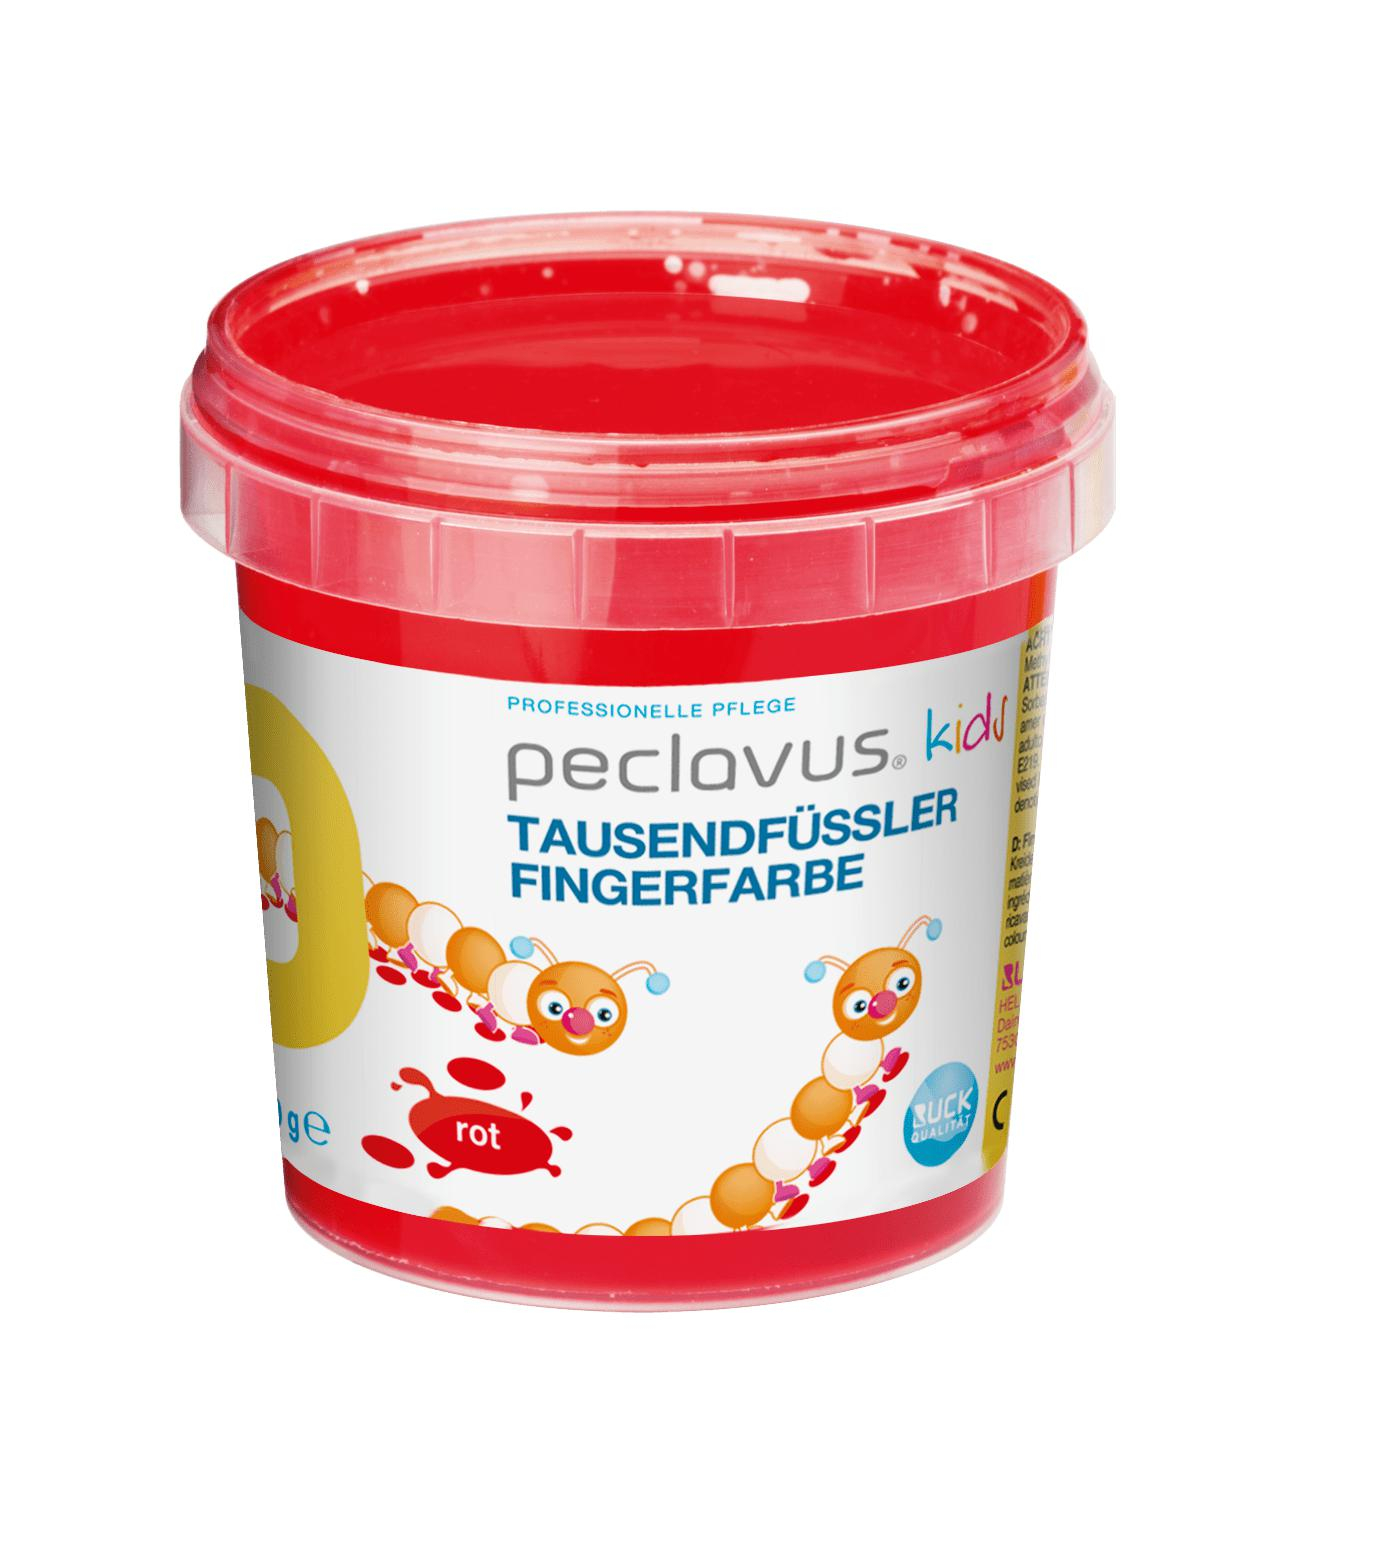 Peclavus kids Fingerfarben-Set | 600 g